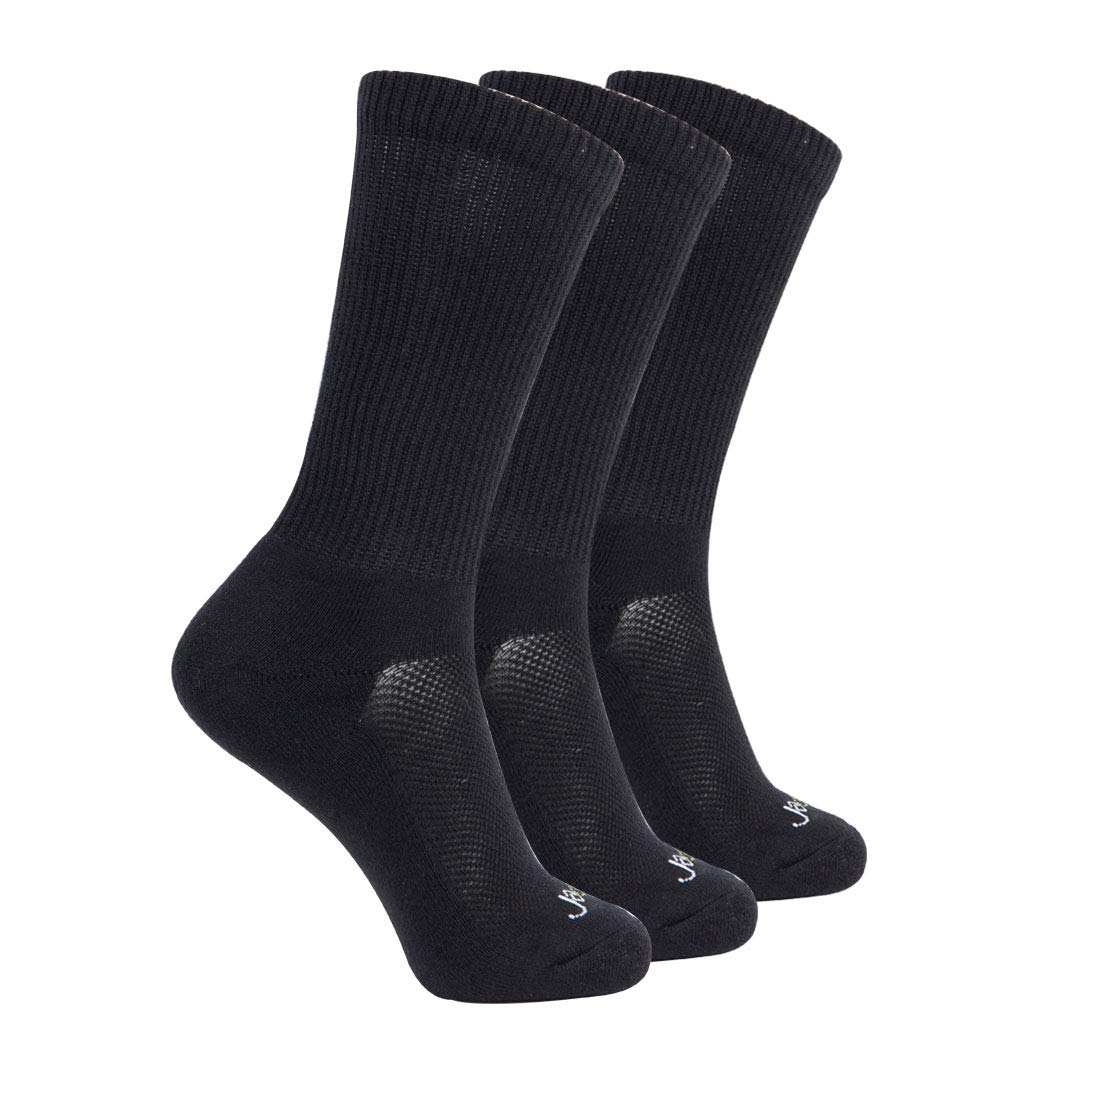 JAVIE Bamboo Diabetic Crew Socks Non-Binding Odor Resistant Merino Wool ...